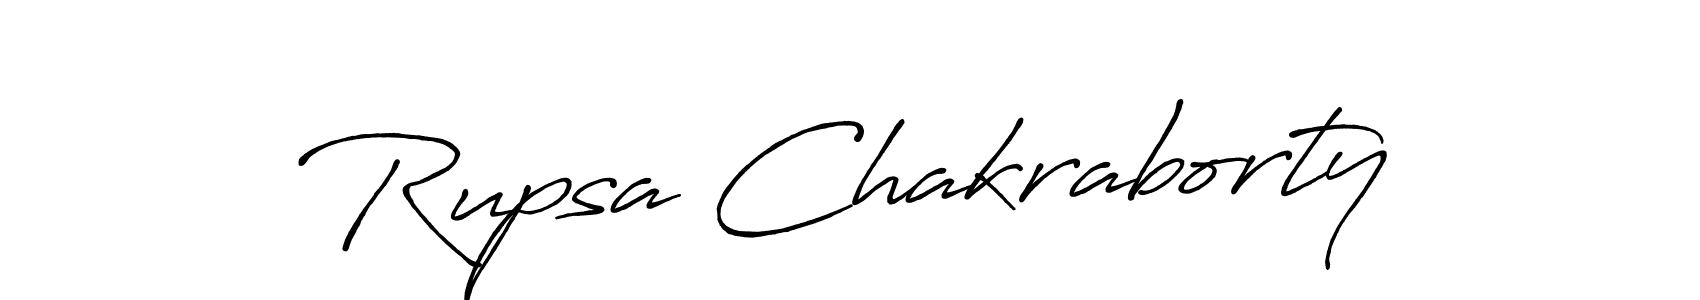 How to Draw Rupsa Chakraborty signature style? Antro_Vectra_Bolder is a latest design signature styles for name Rupsa Chakraborty. Rupsa Chakraborty signature style 7 images and pictures png